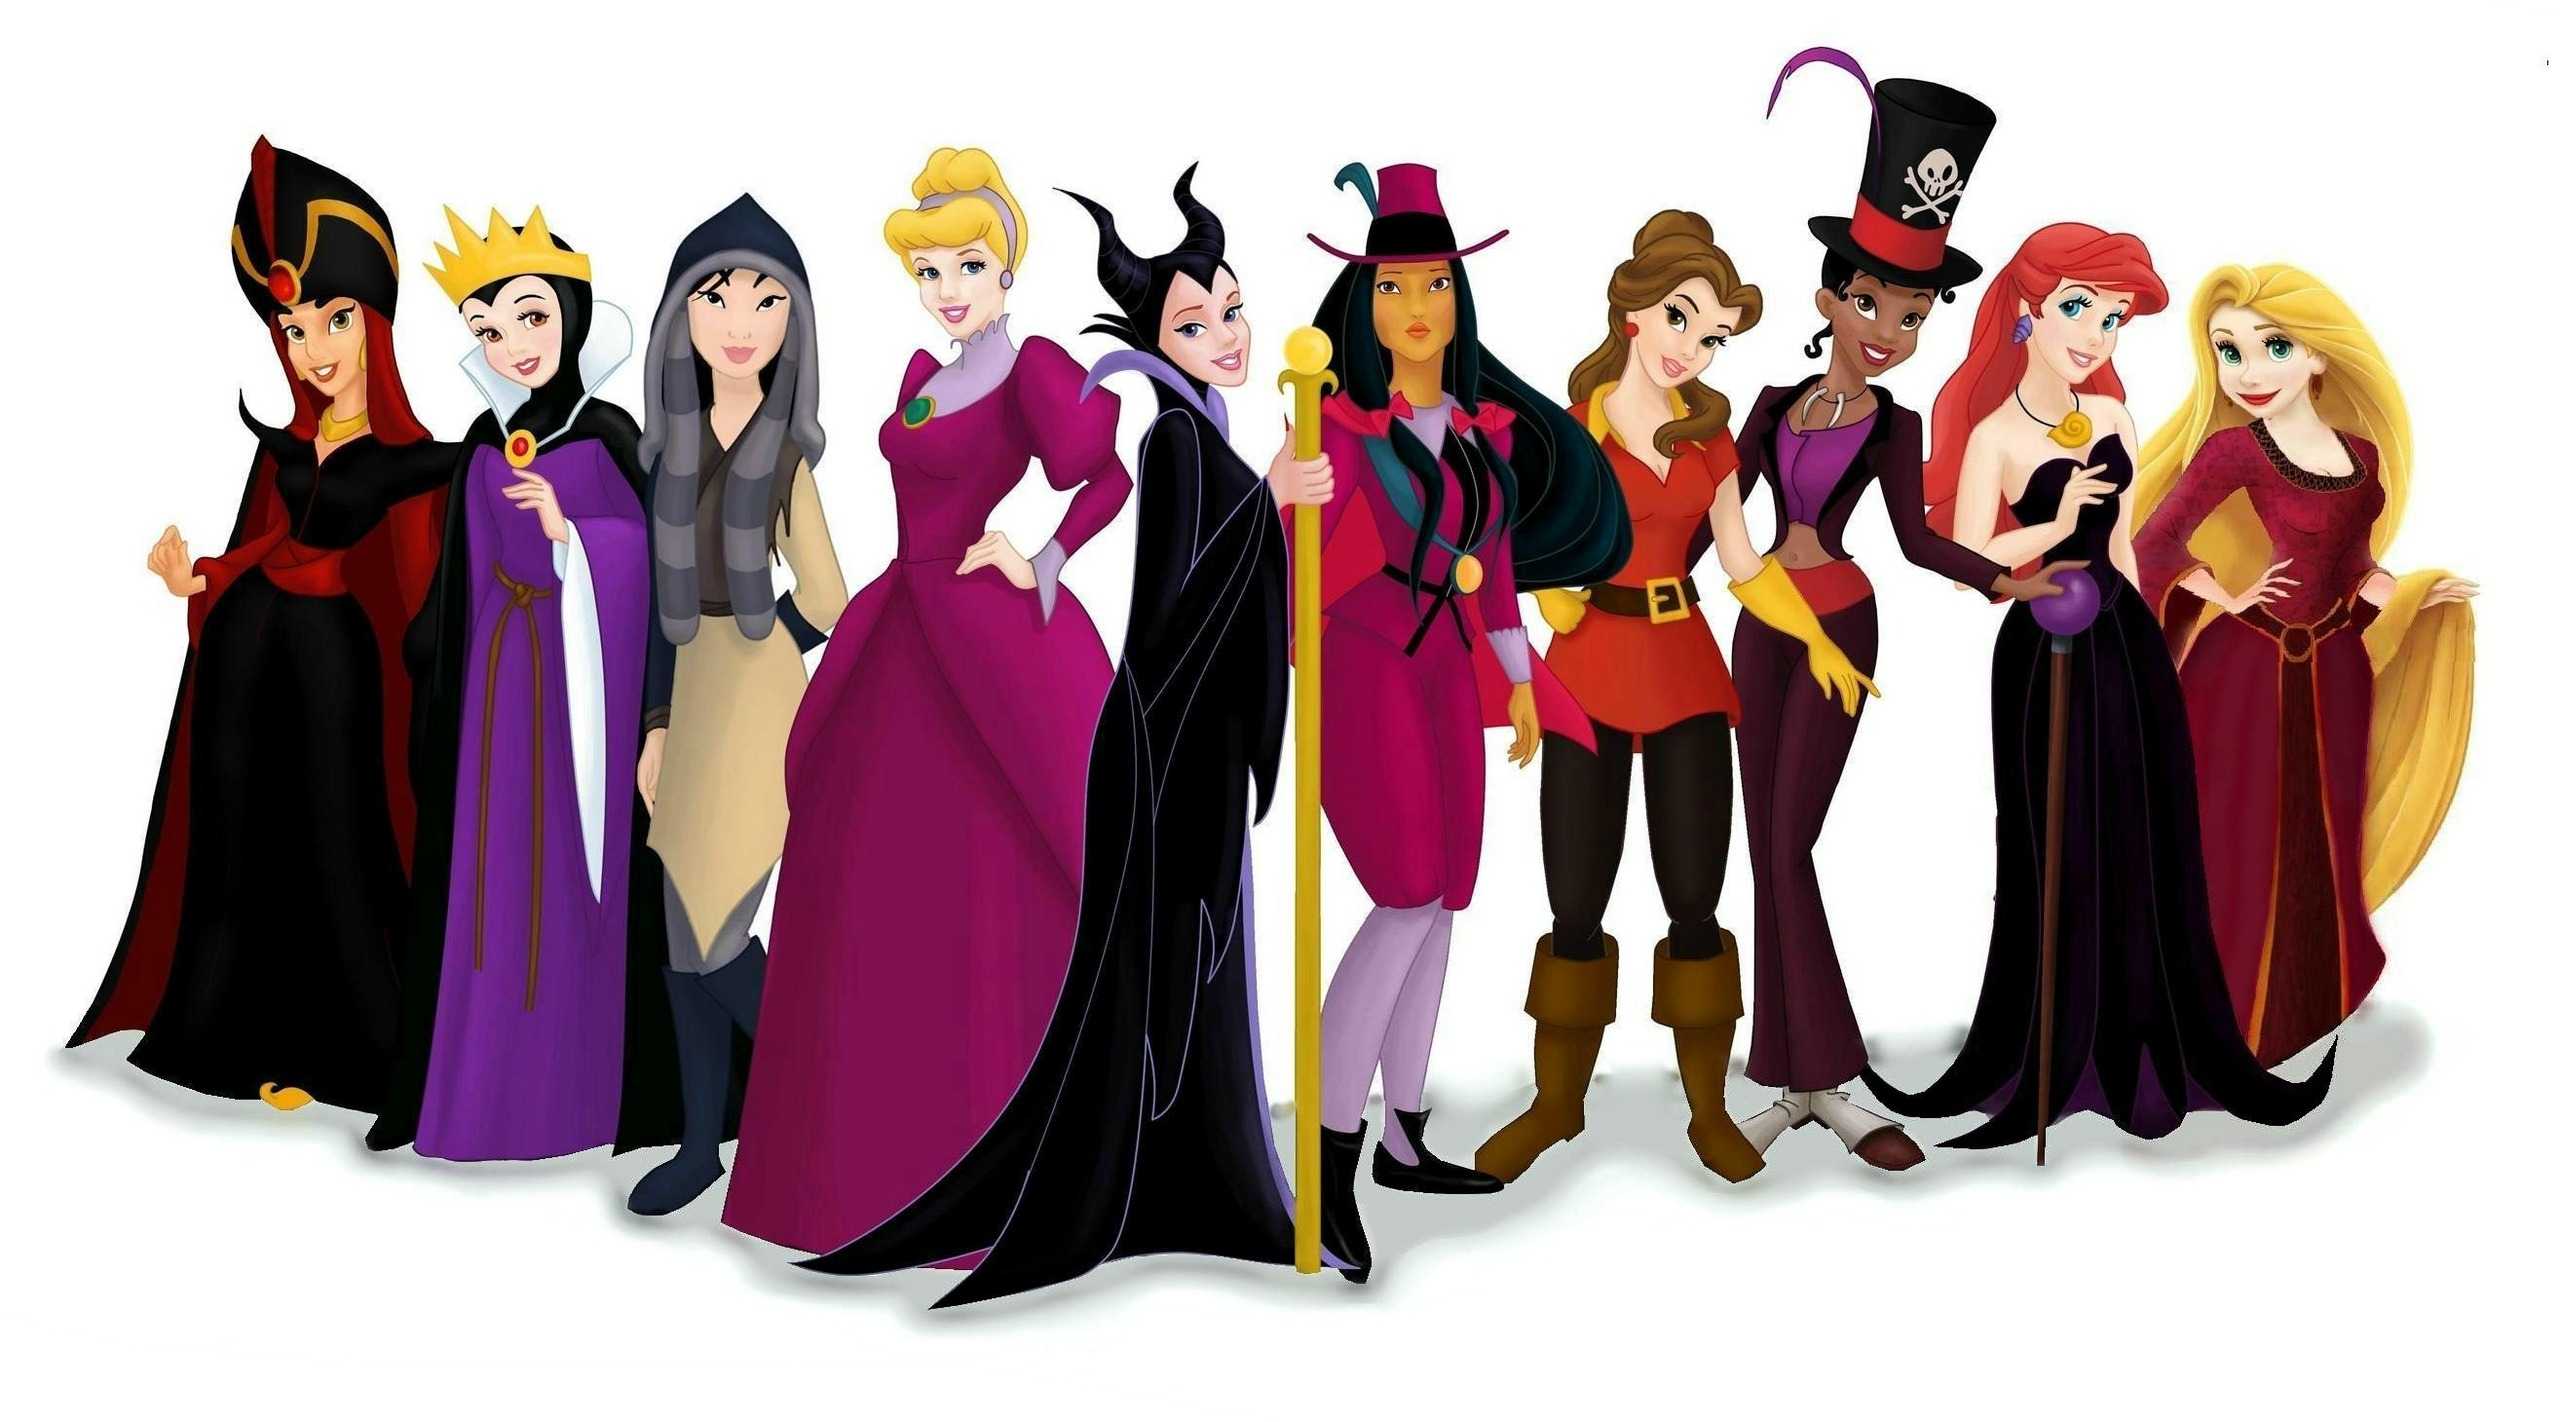 princesses-as-villians-including-rapunzel-as-gothel-disney-princess-photo-24822506-fanpop